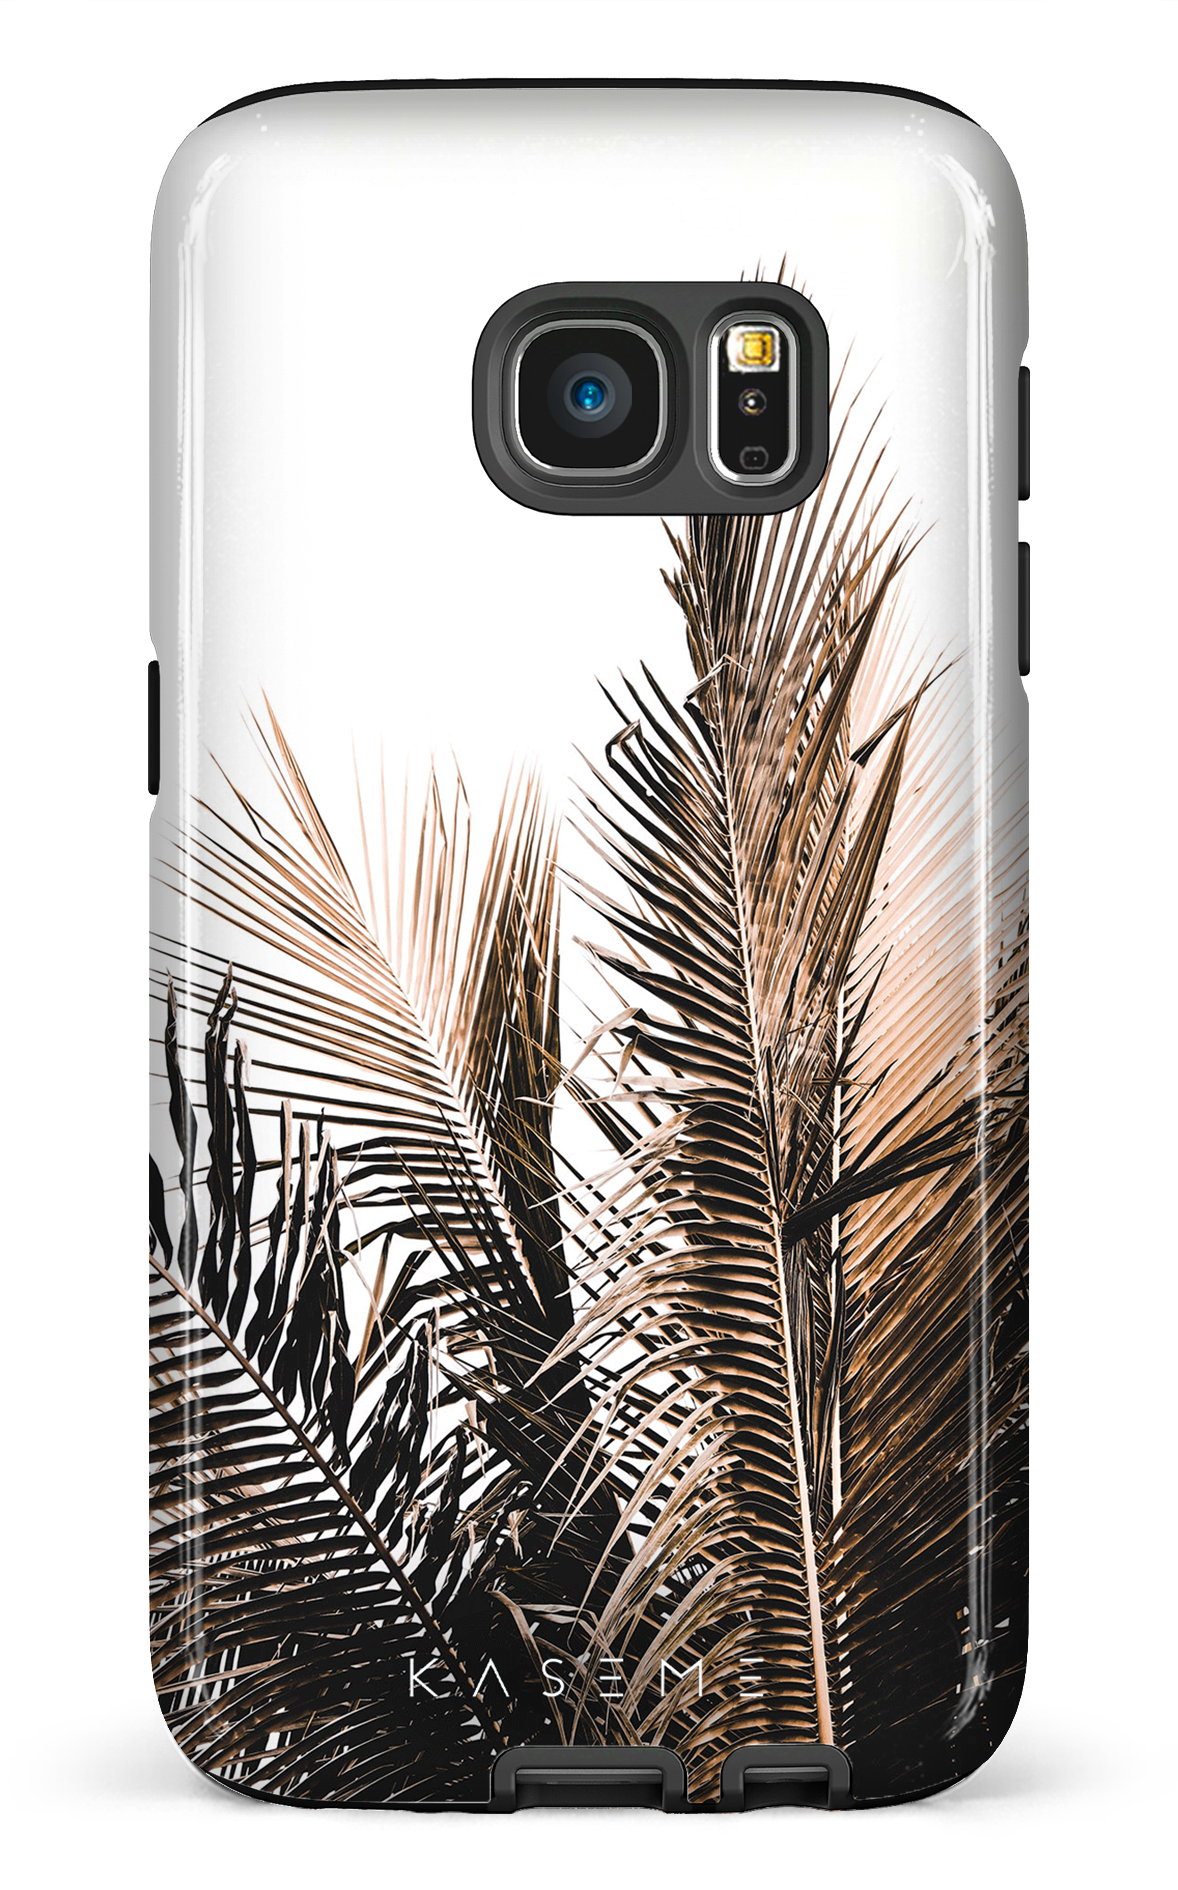 Cali - Galaxy S7